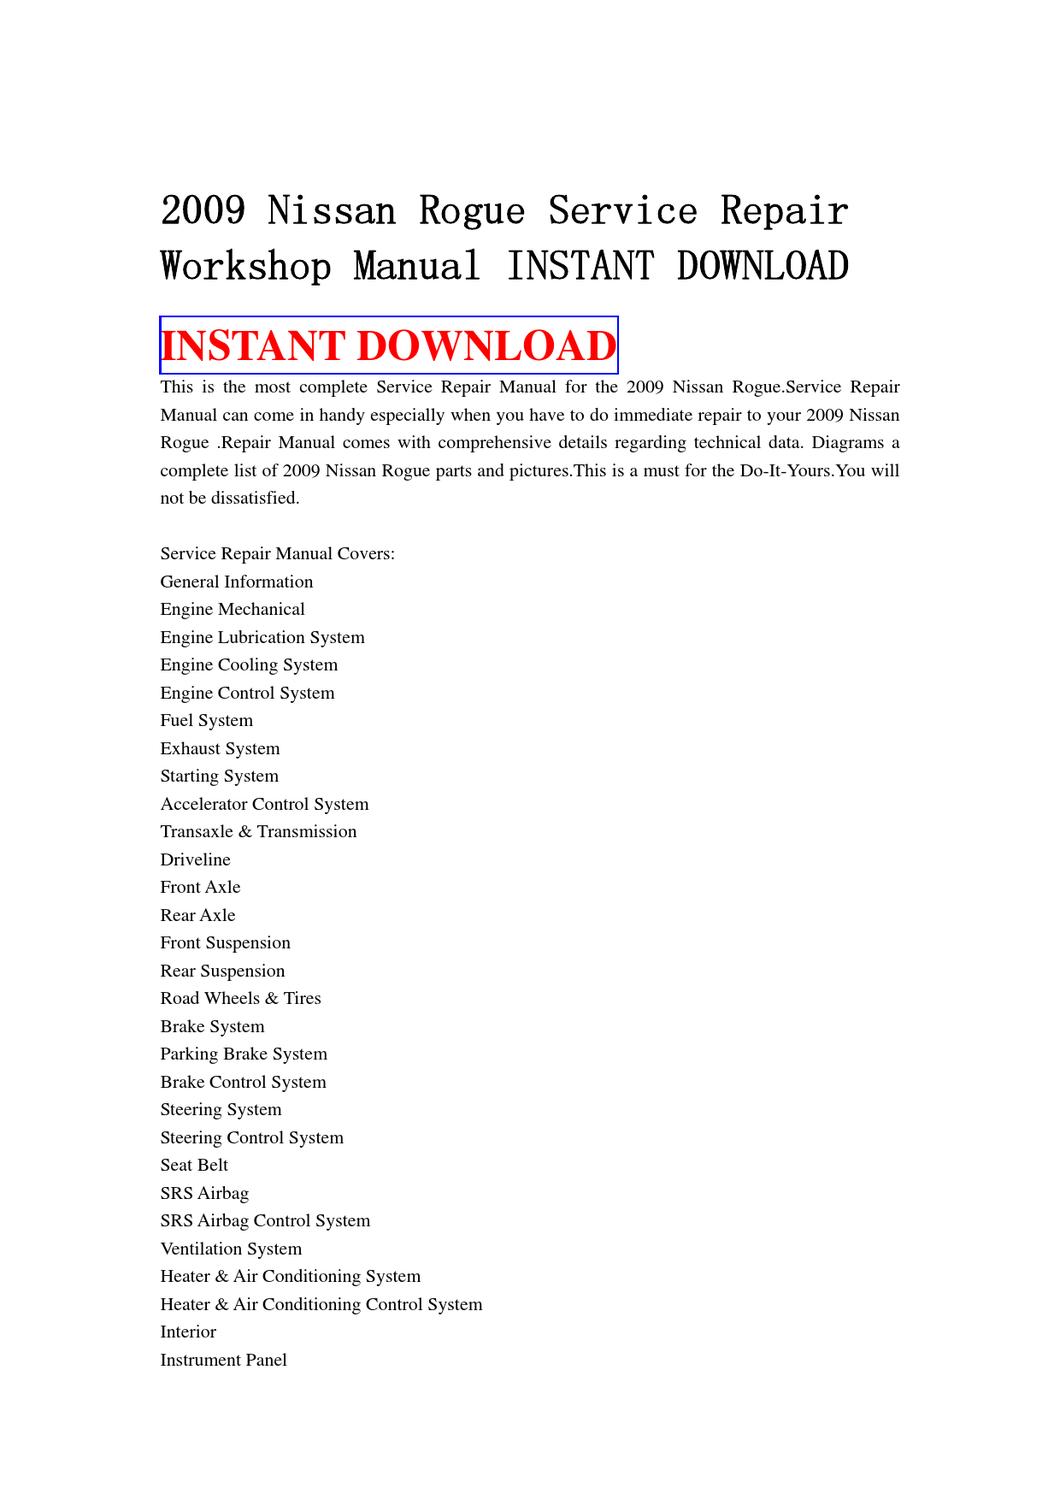 Sdf Dedicant Manual Download